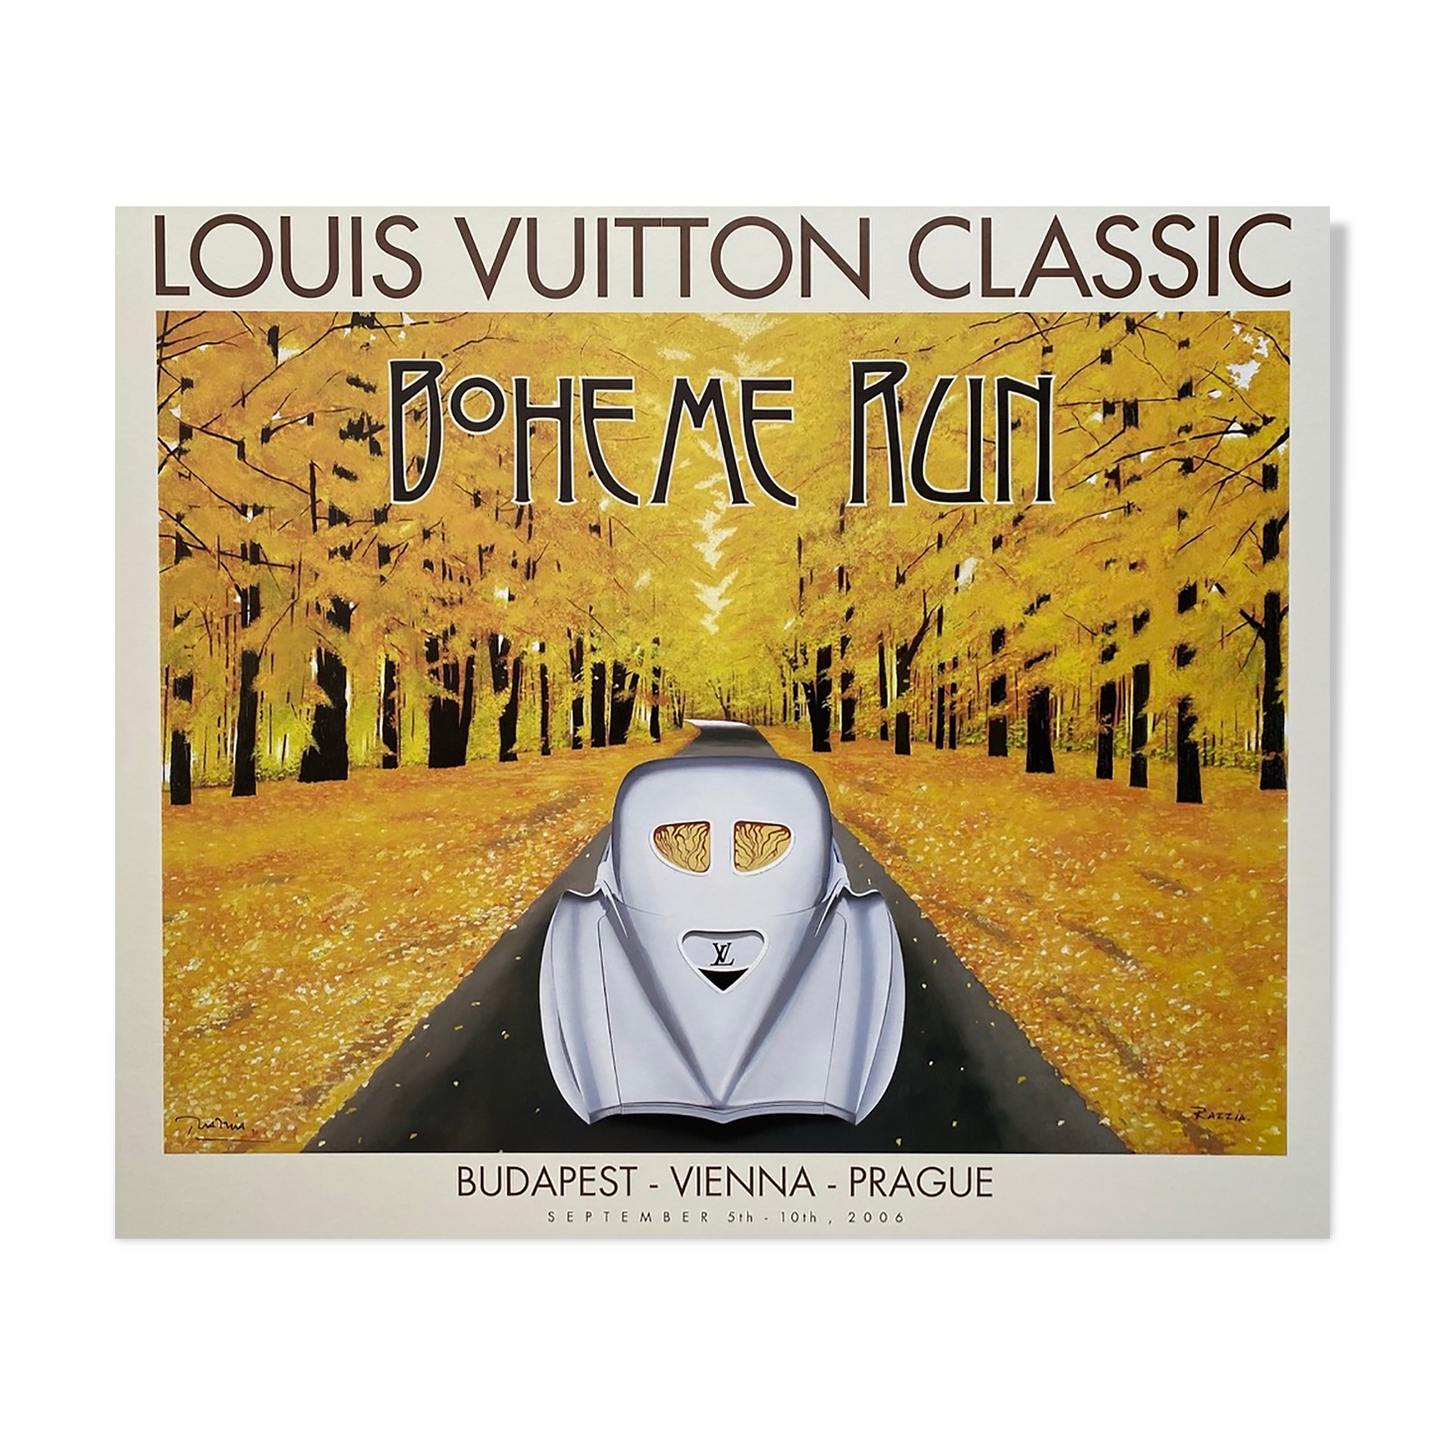 Louis Vuitton Boheme Run (medium format)